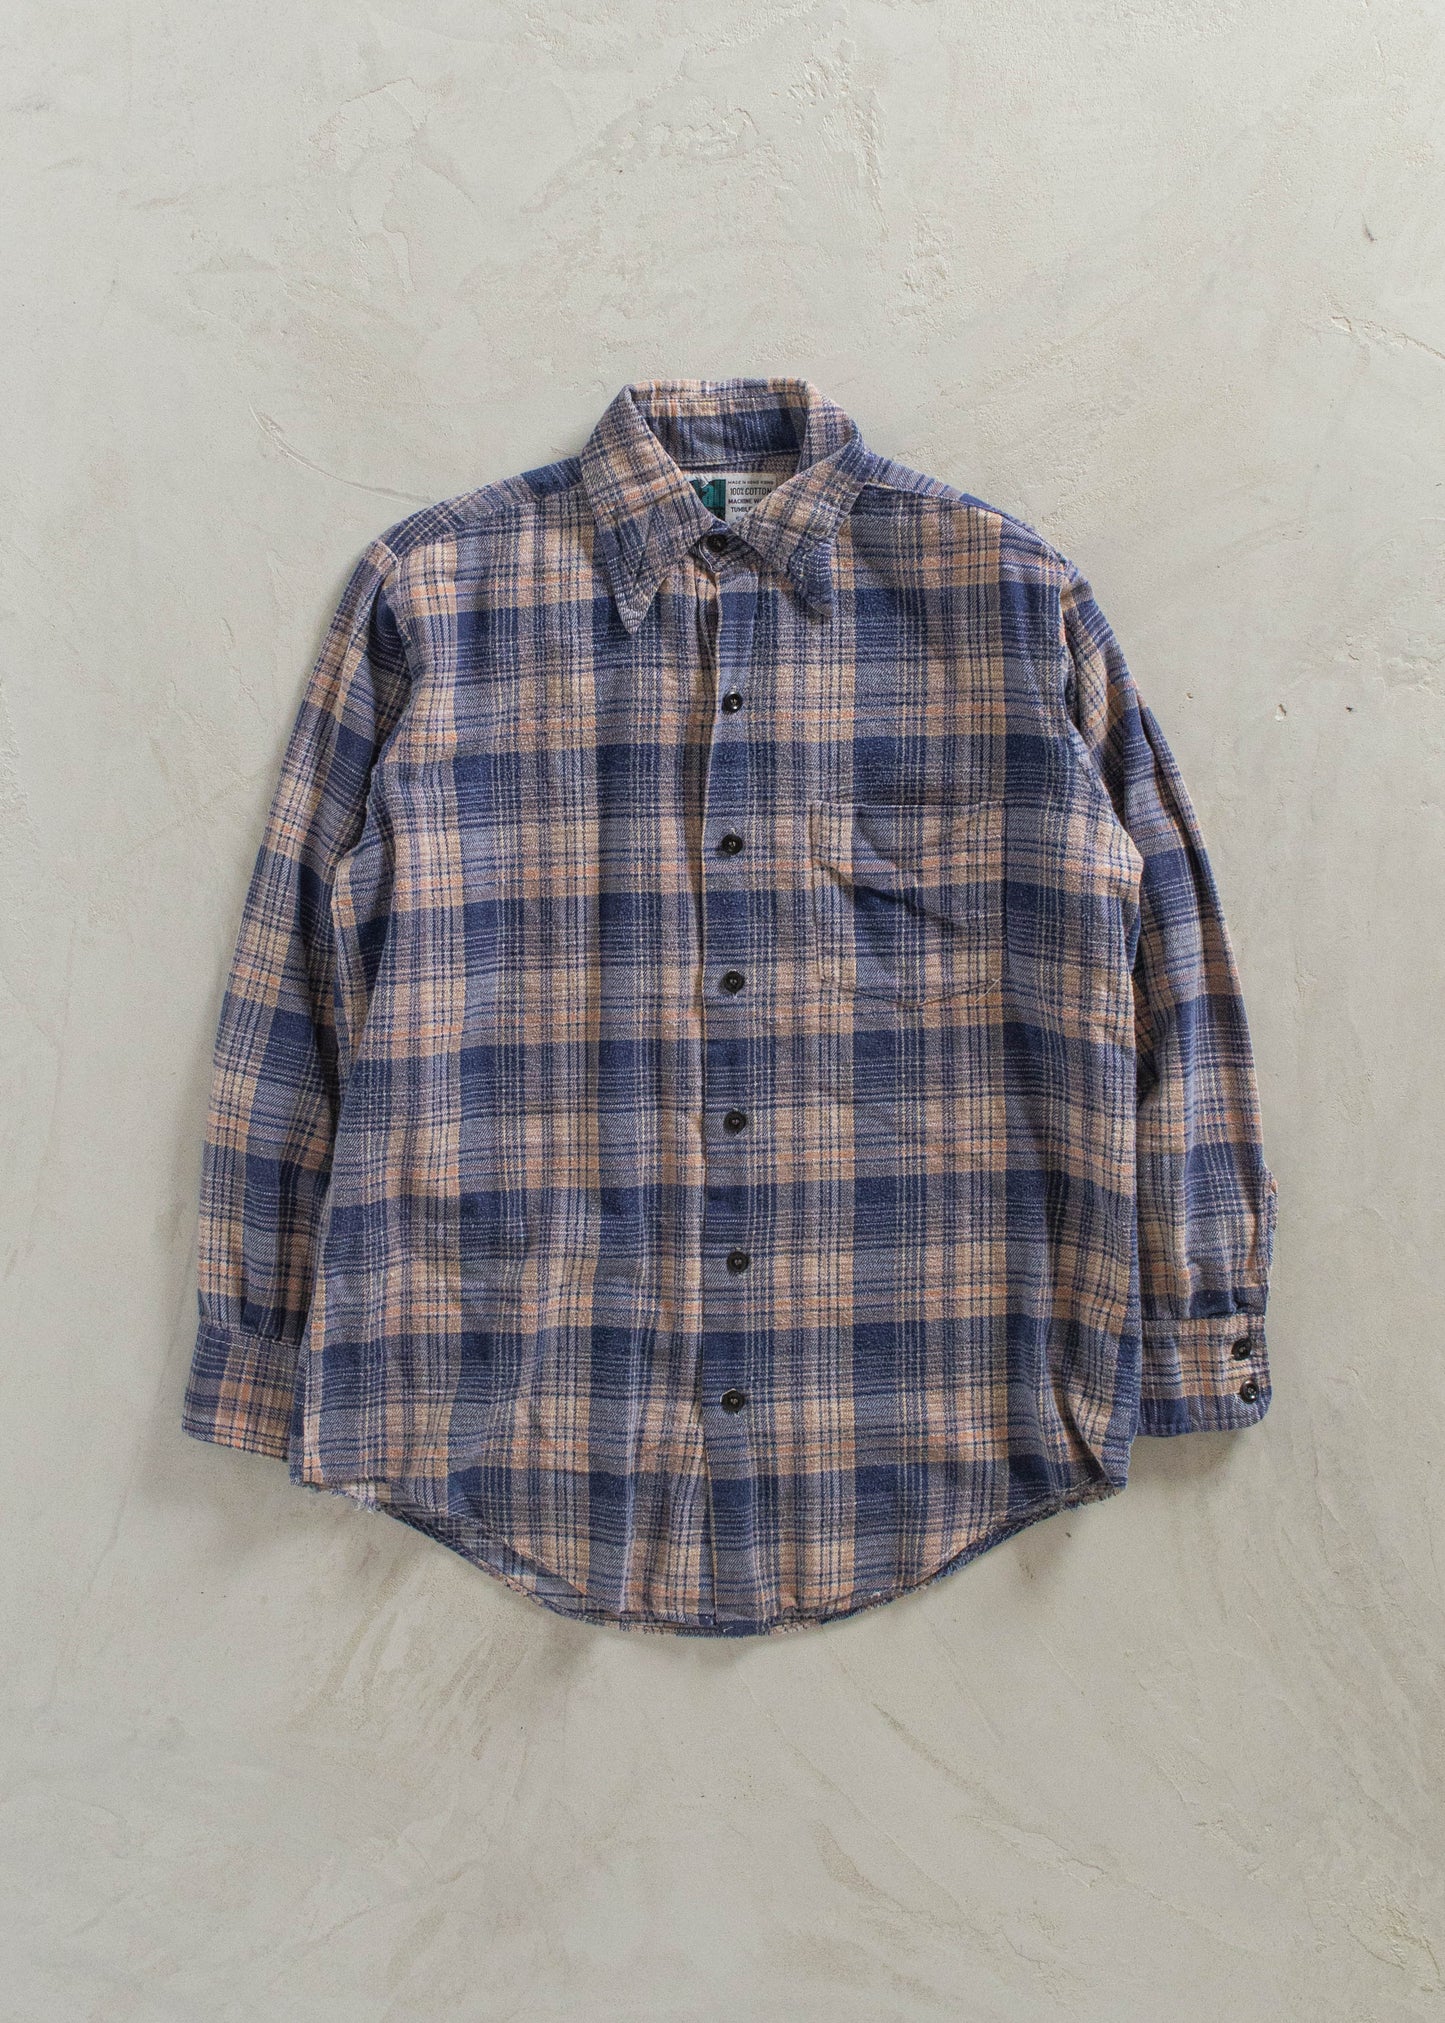 1990s Cotton Flannel Button Up Shirt Size XS/S